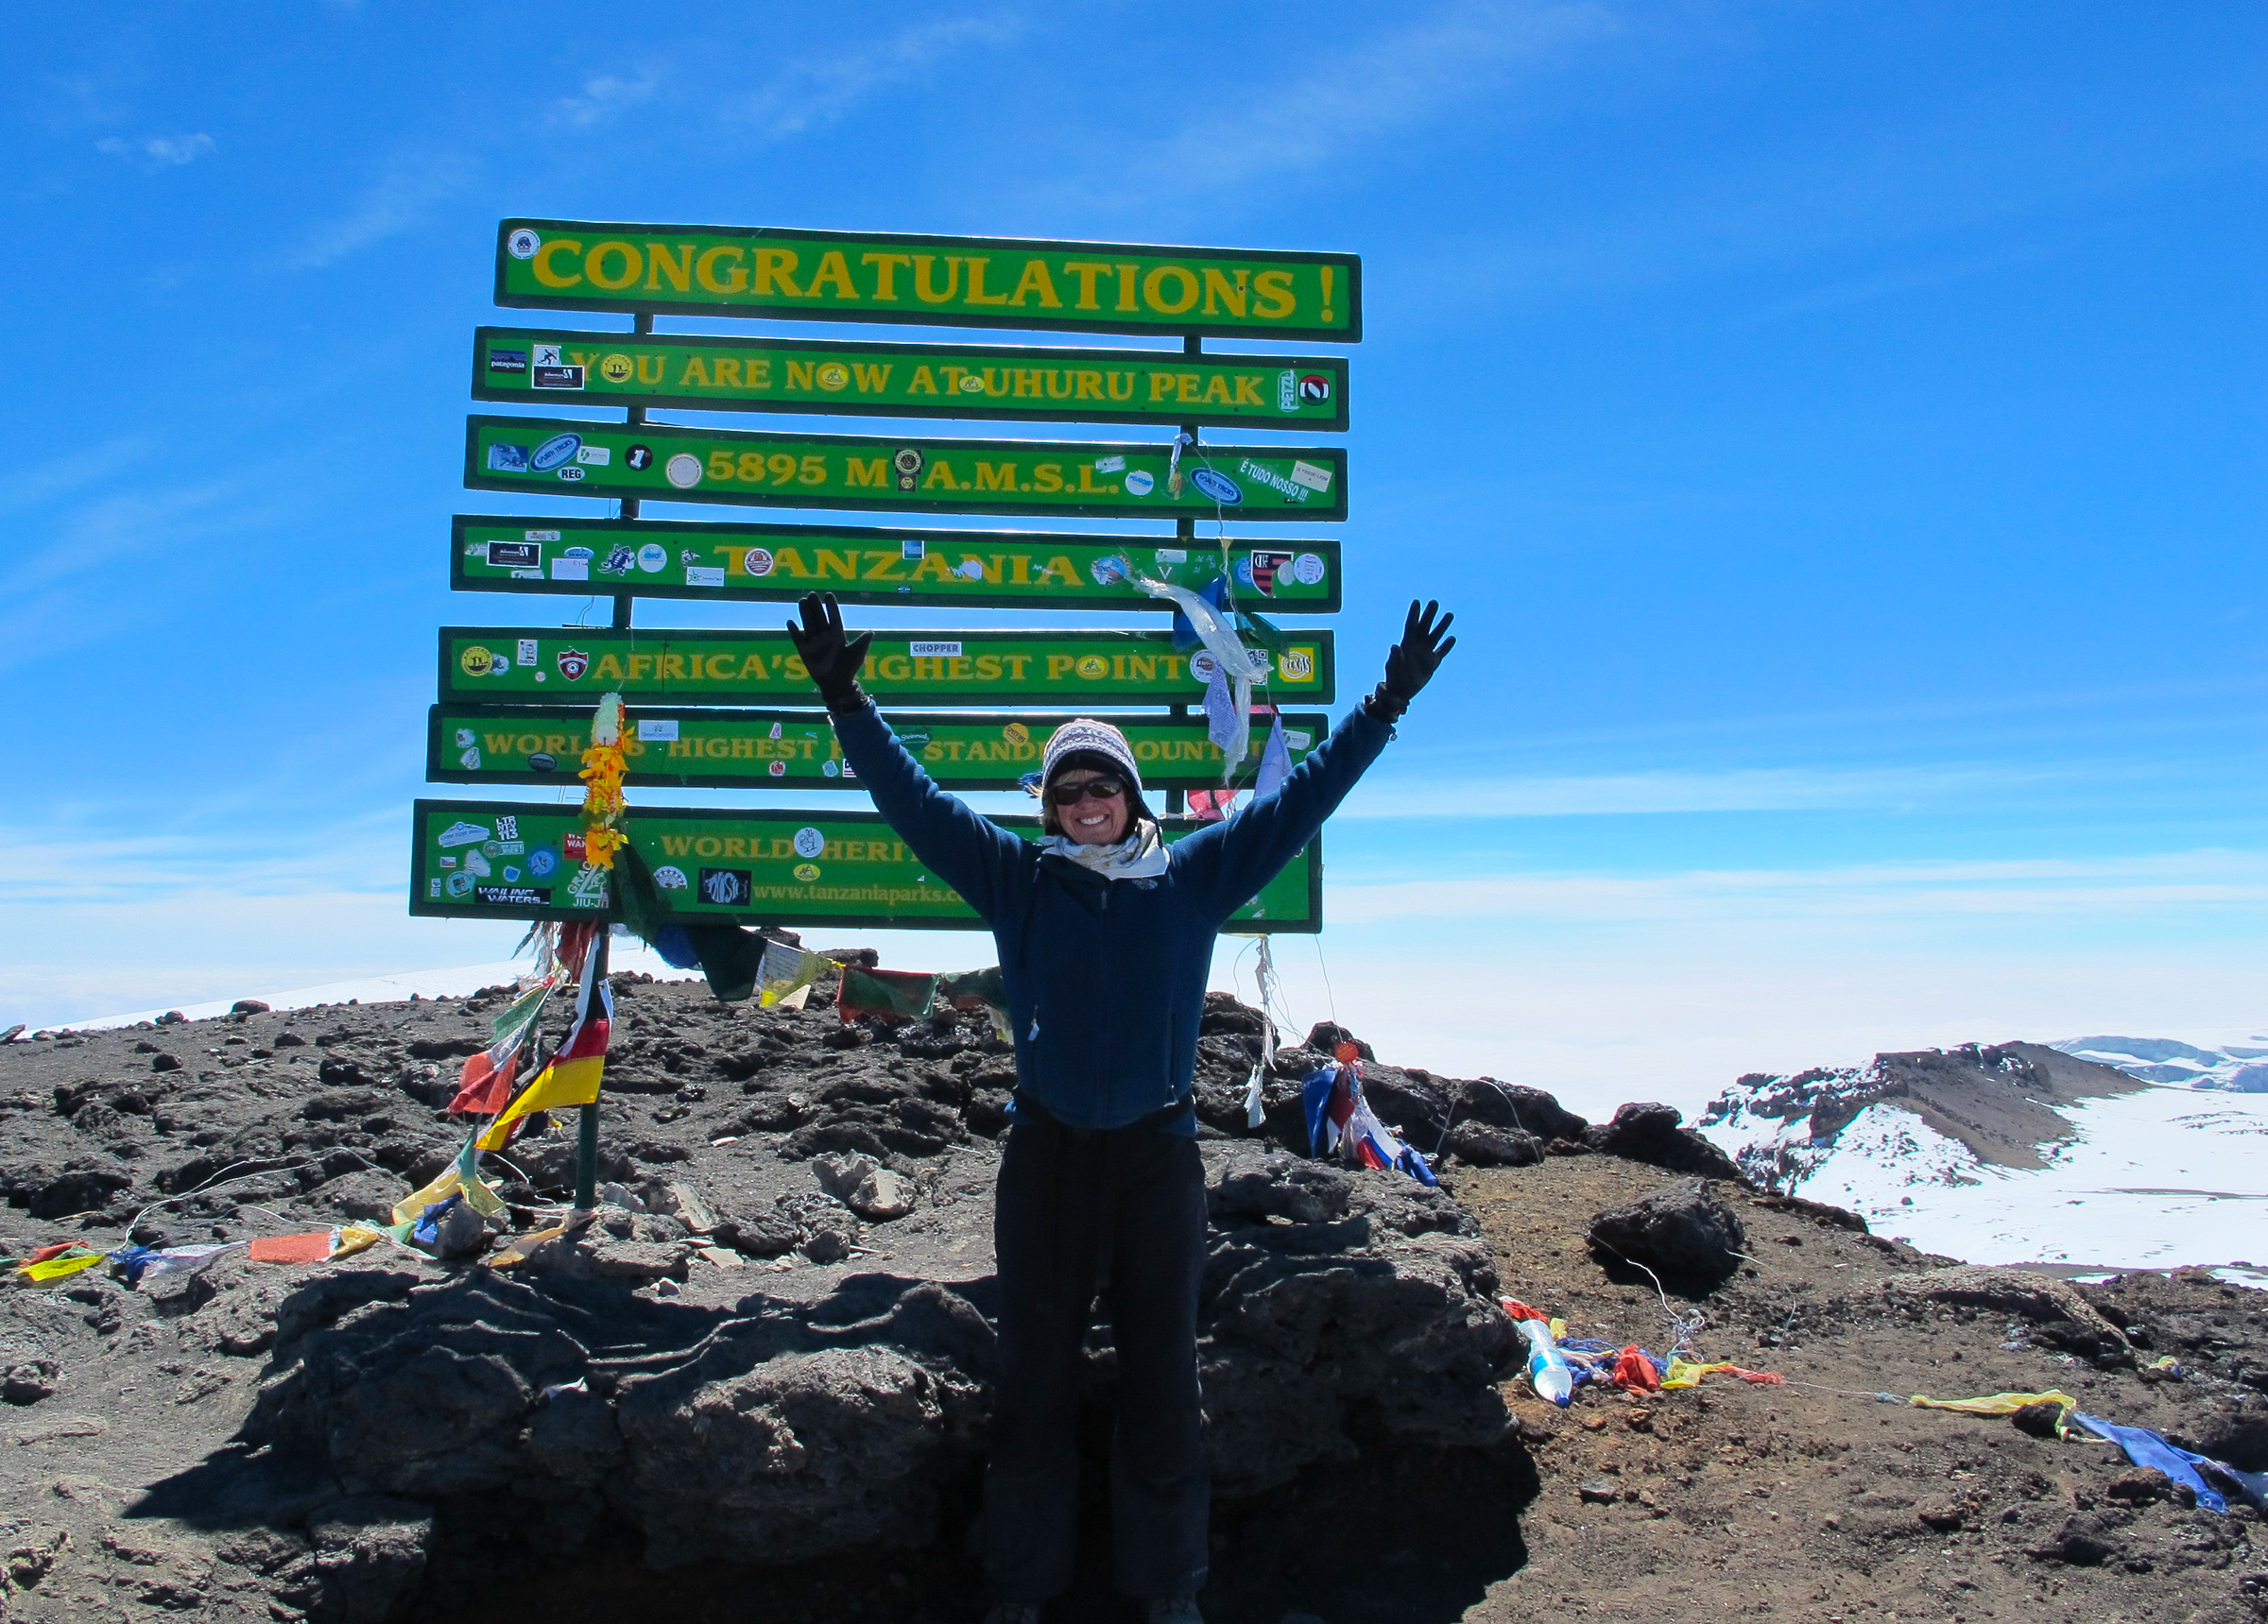 Mt. Kilimanjaro Climb with Celebratory Safari